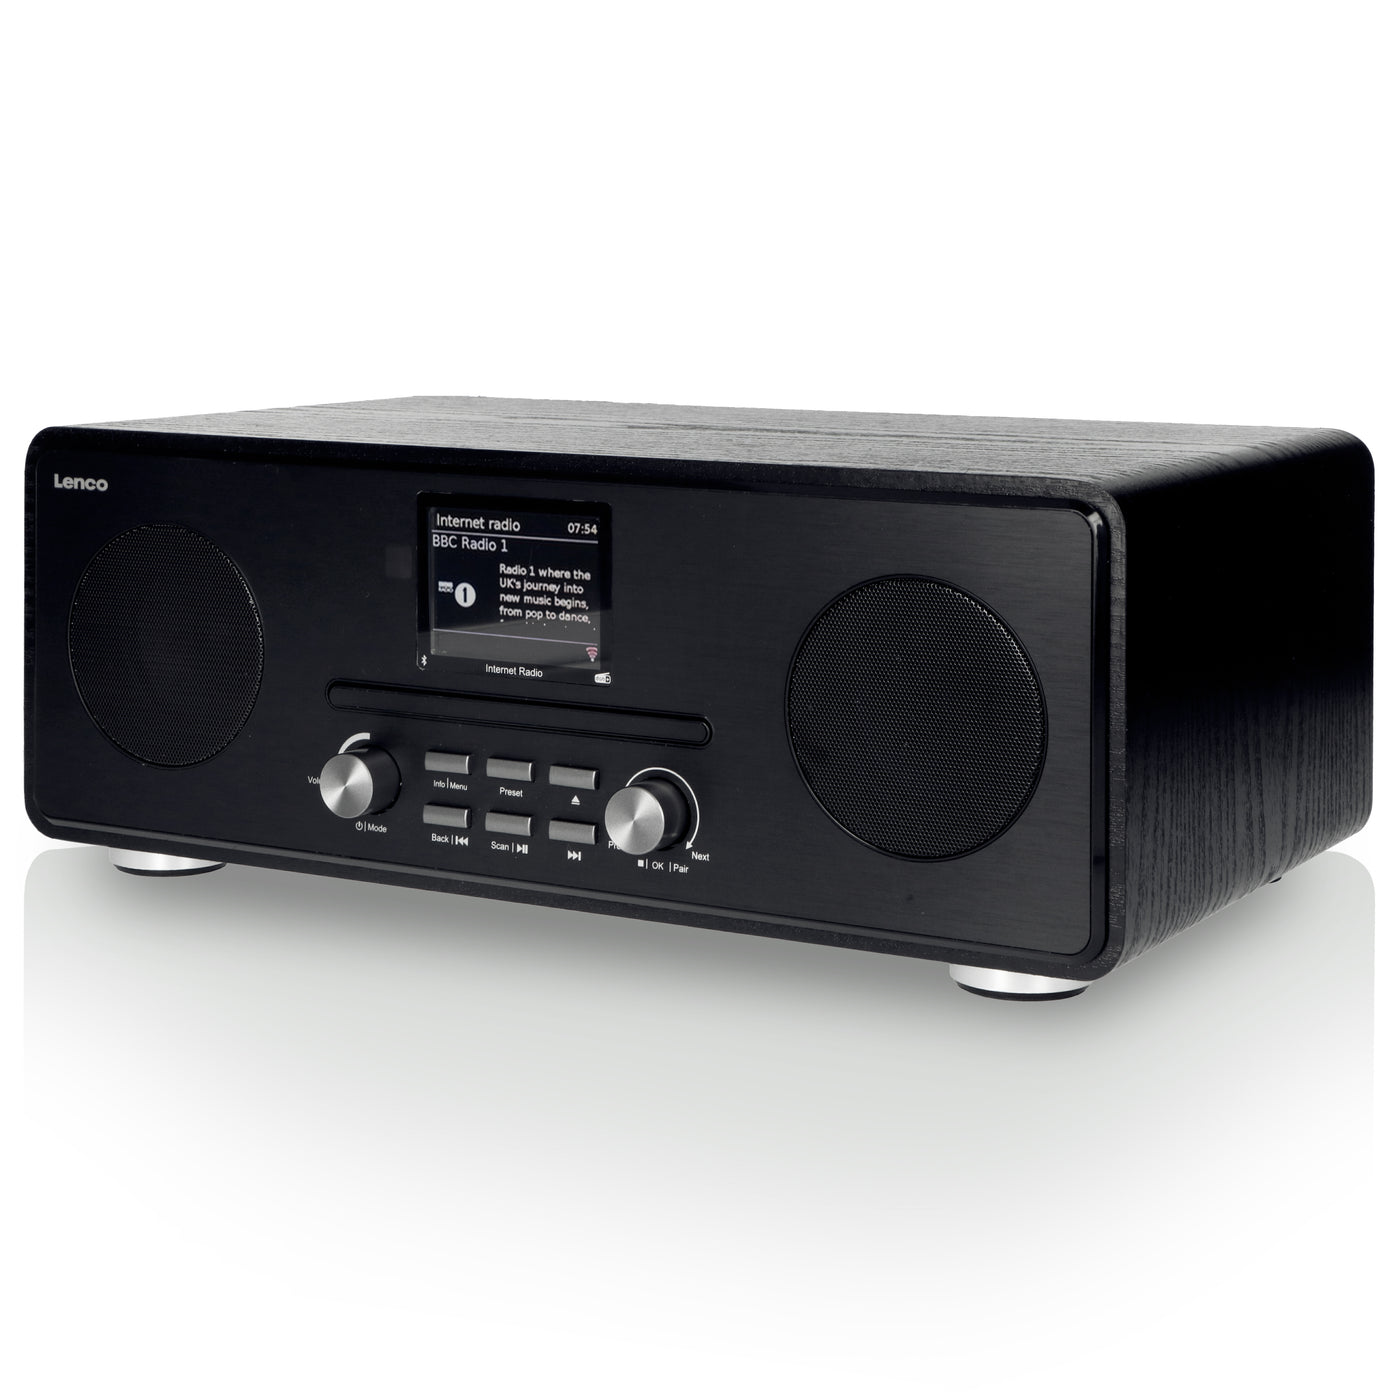 Lenco DIR-260BK - Internetradio mit DAB+ und FM-Radio, CD/MP3-Player, Bluetooth®, 2 x 10 Watt RMS, 2,8" Farbdisplay, schwarz